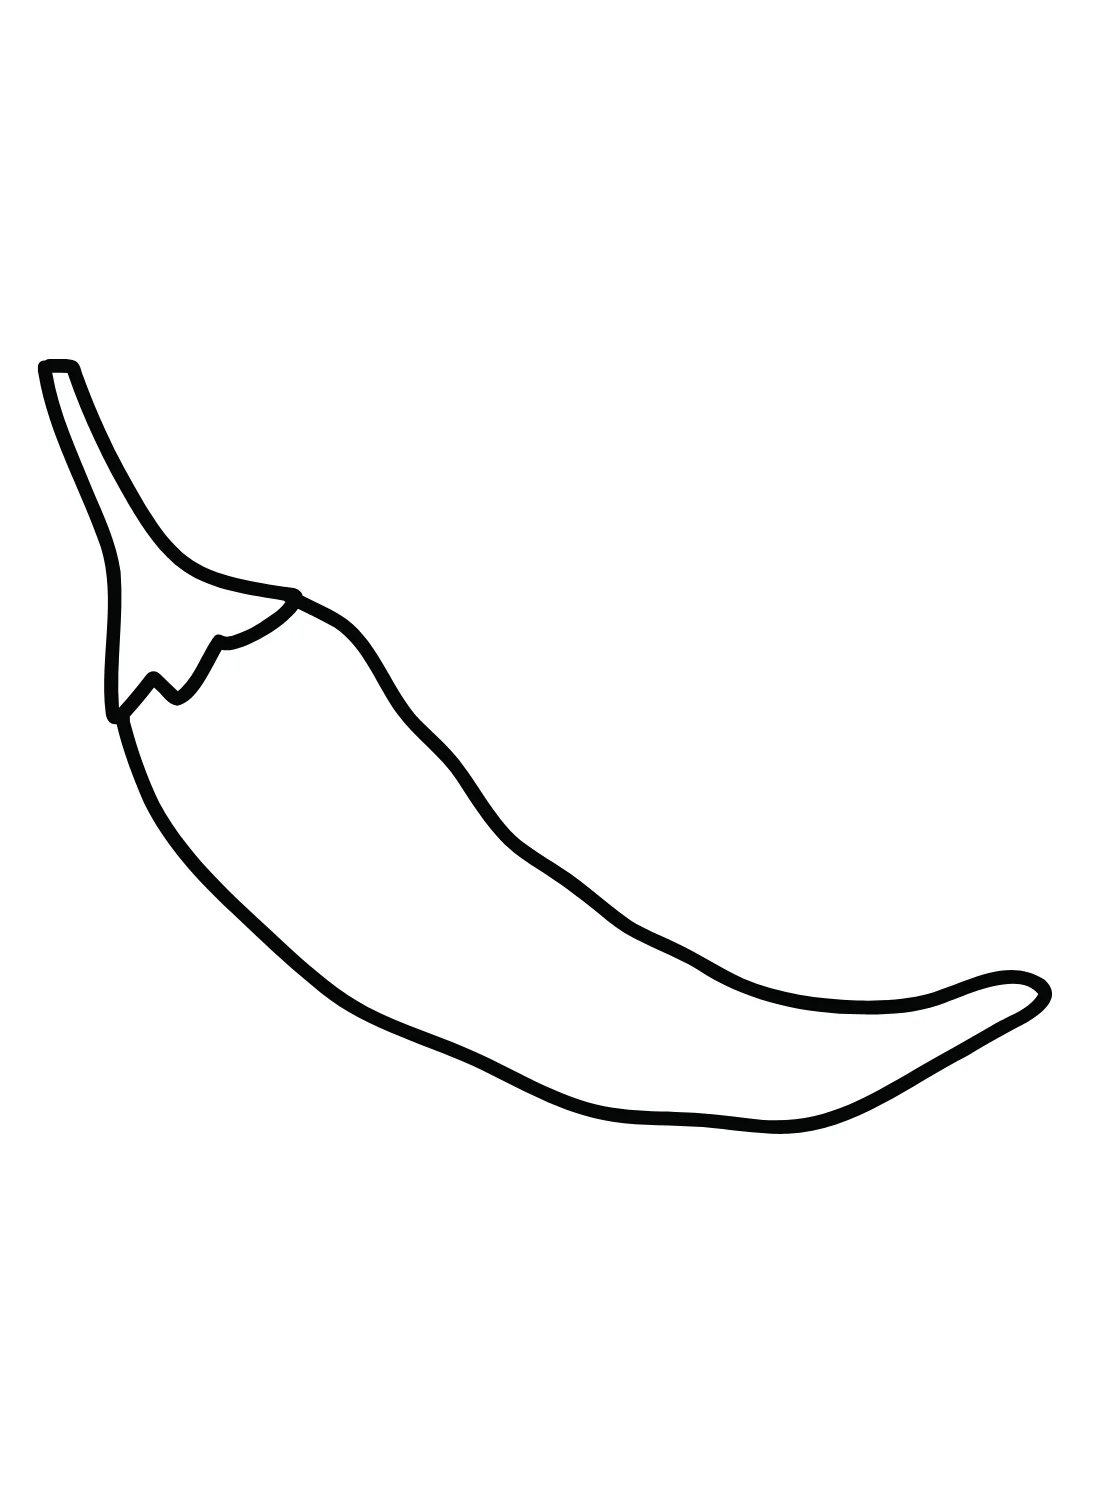 Desenho de pimenta de pimenta